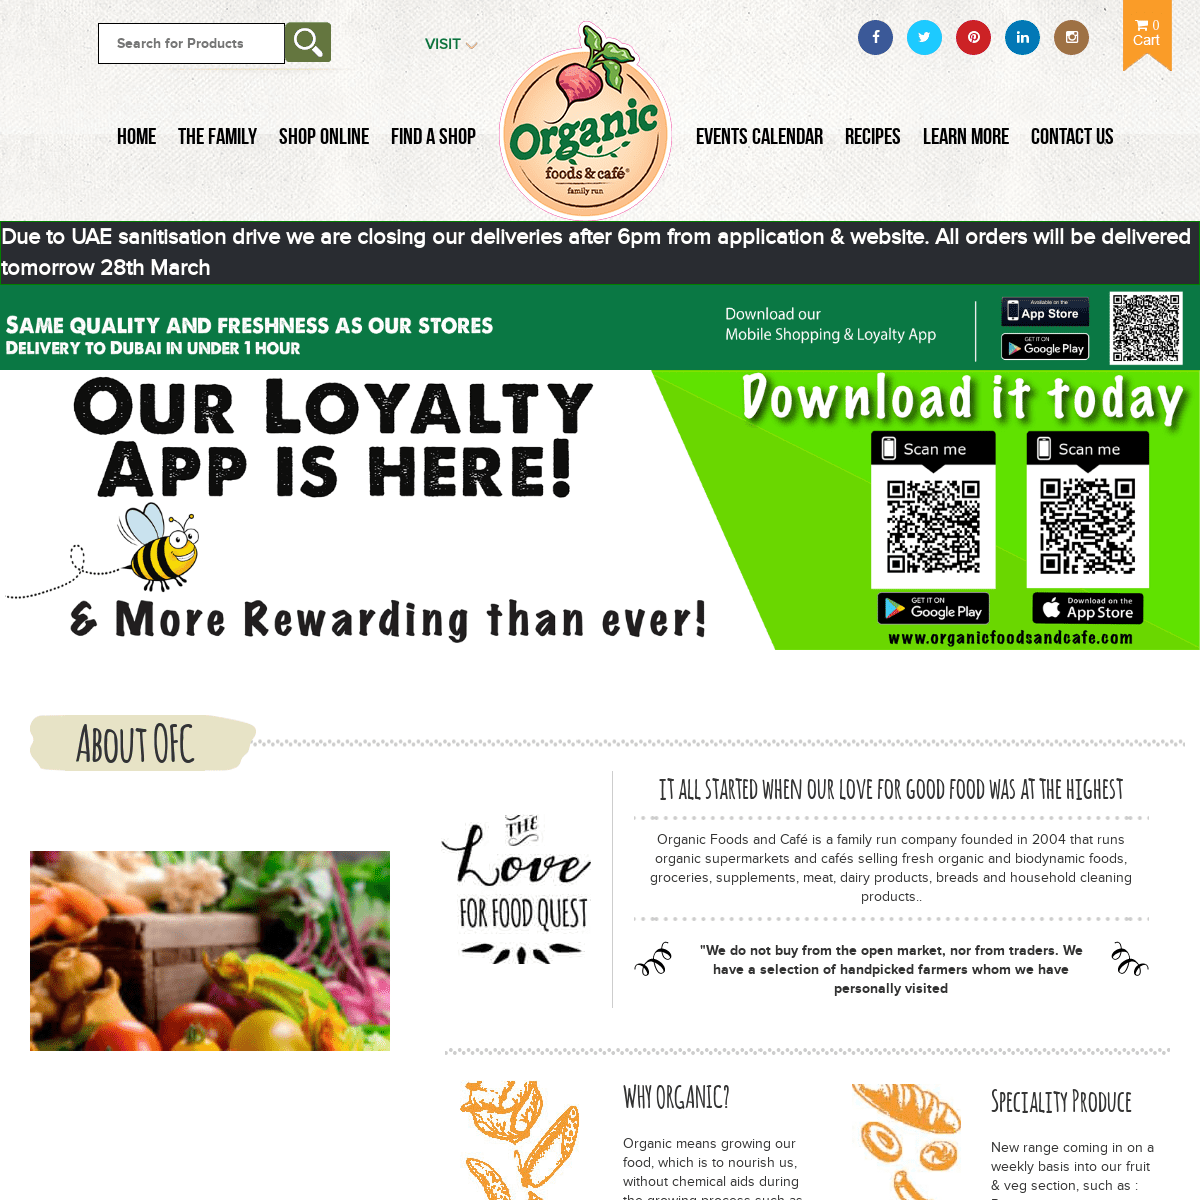 A complete backup of organicfoodsandcafe.com